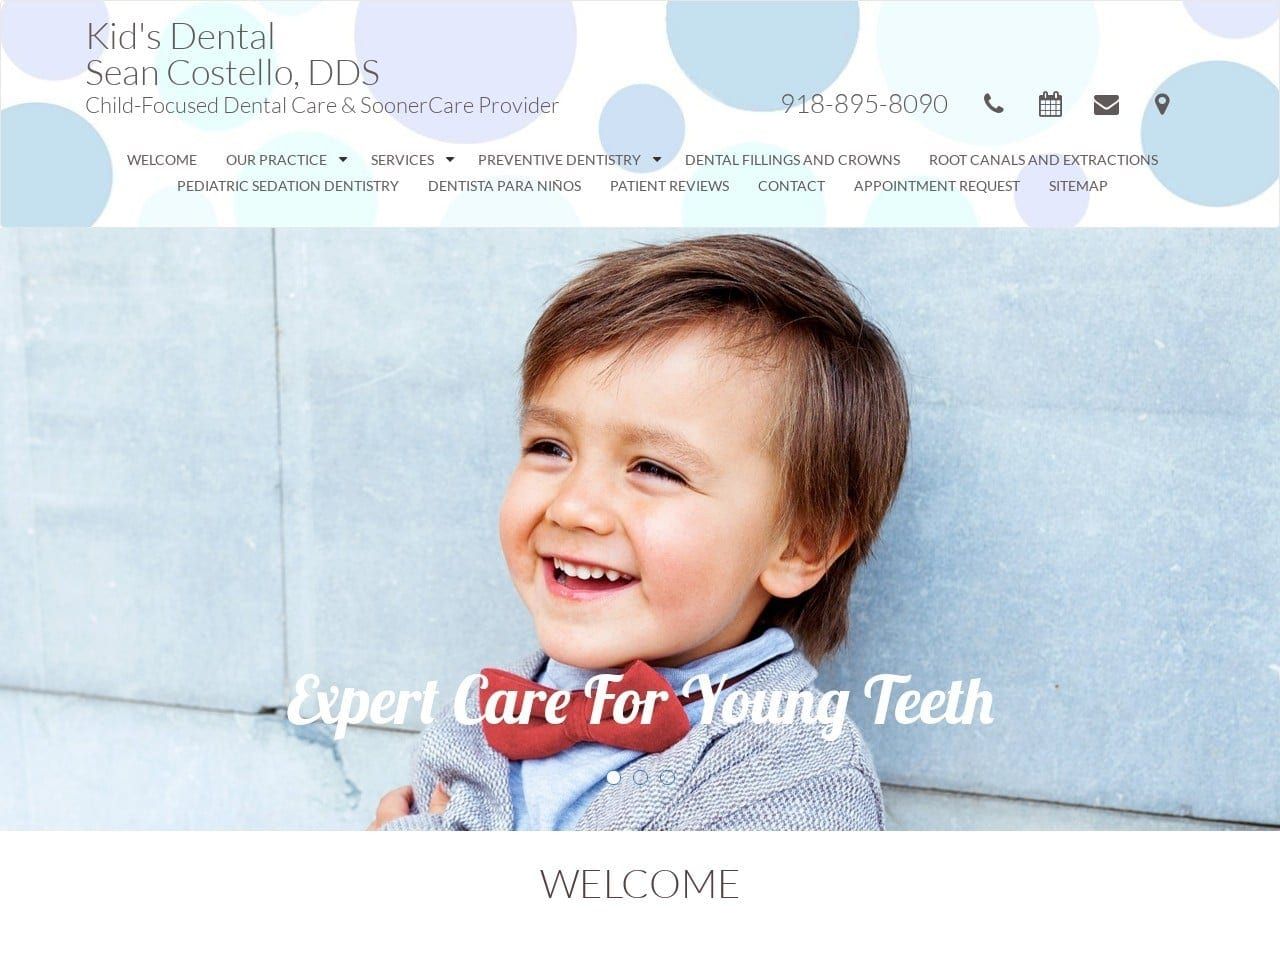 Kids Dental Website Screenshot from tulsakidsdental.com